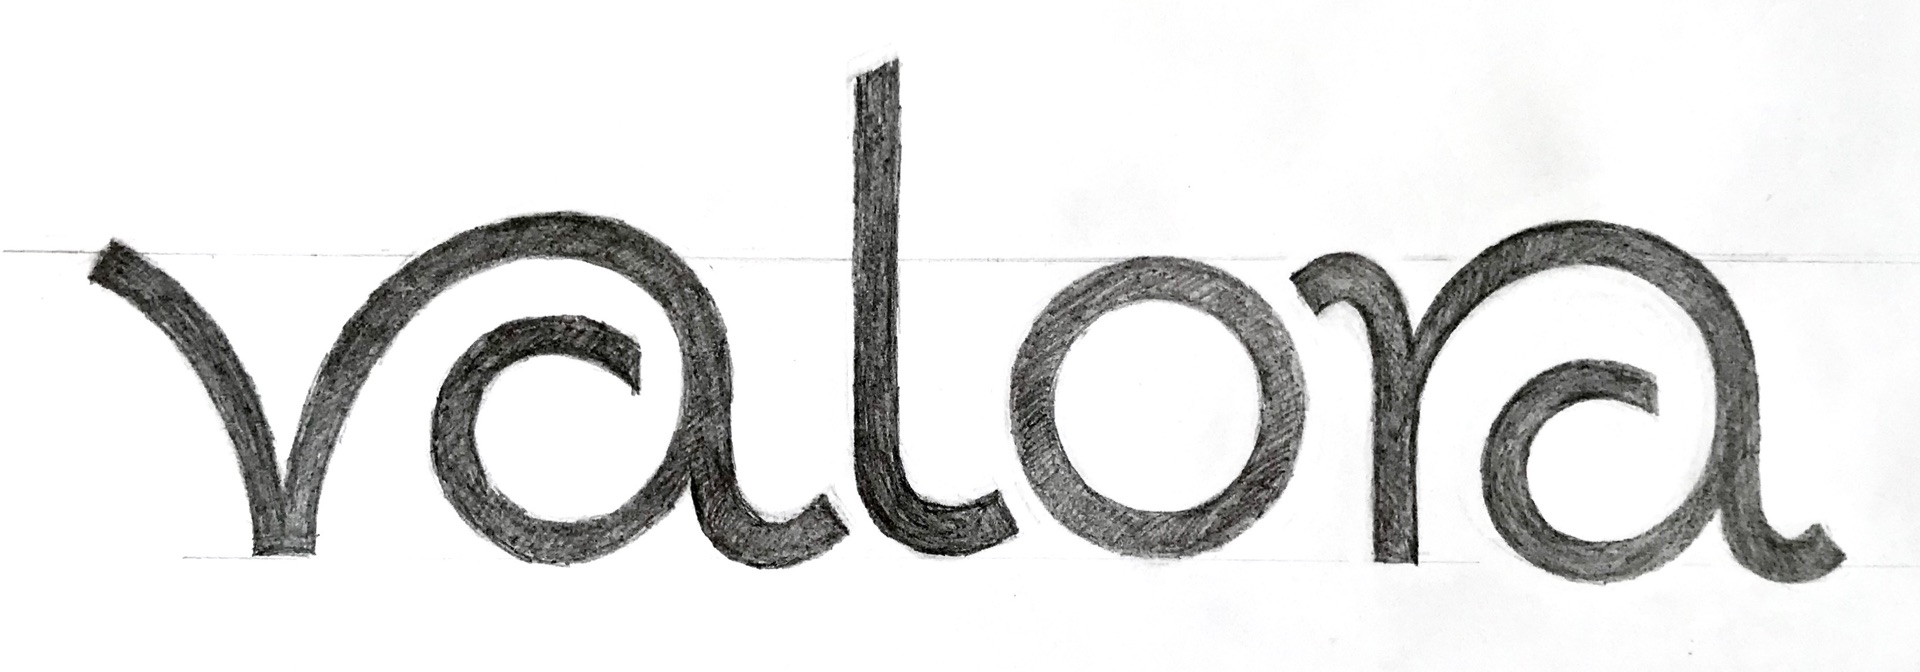 Valora Logotype Iterations